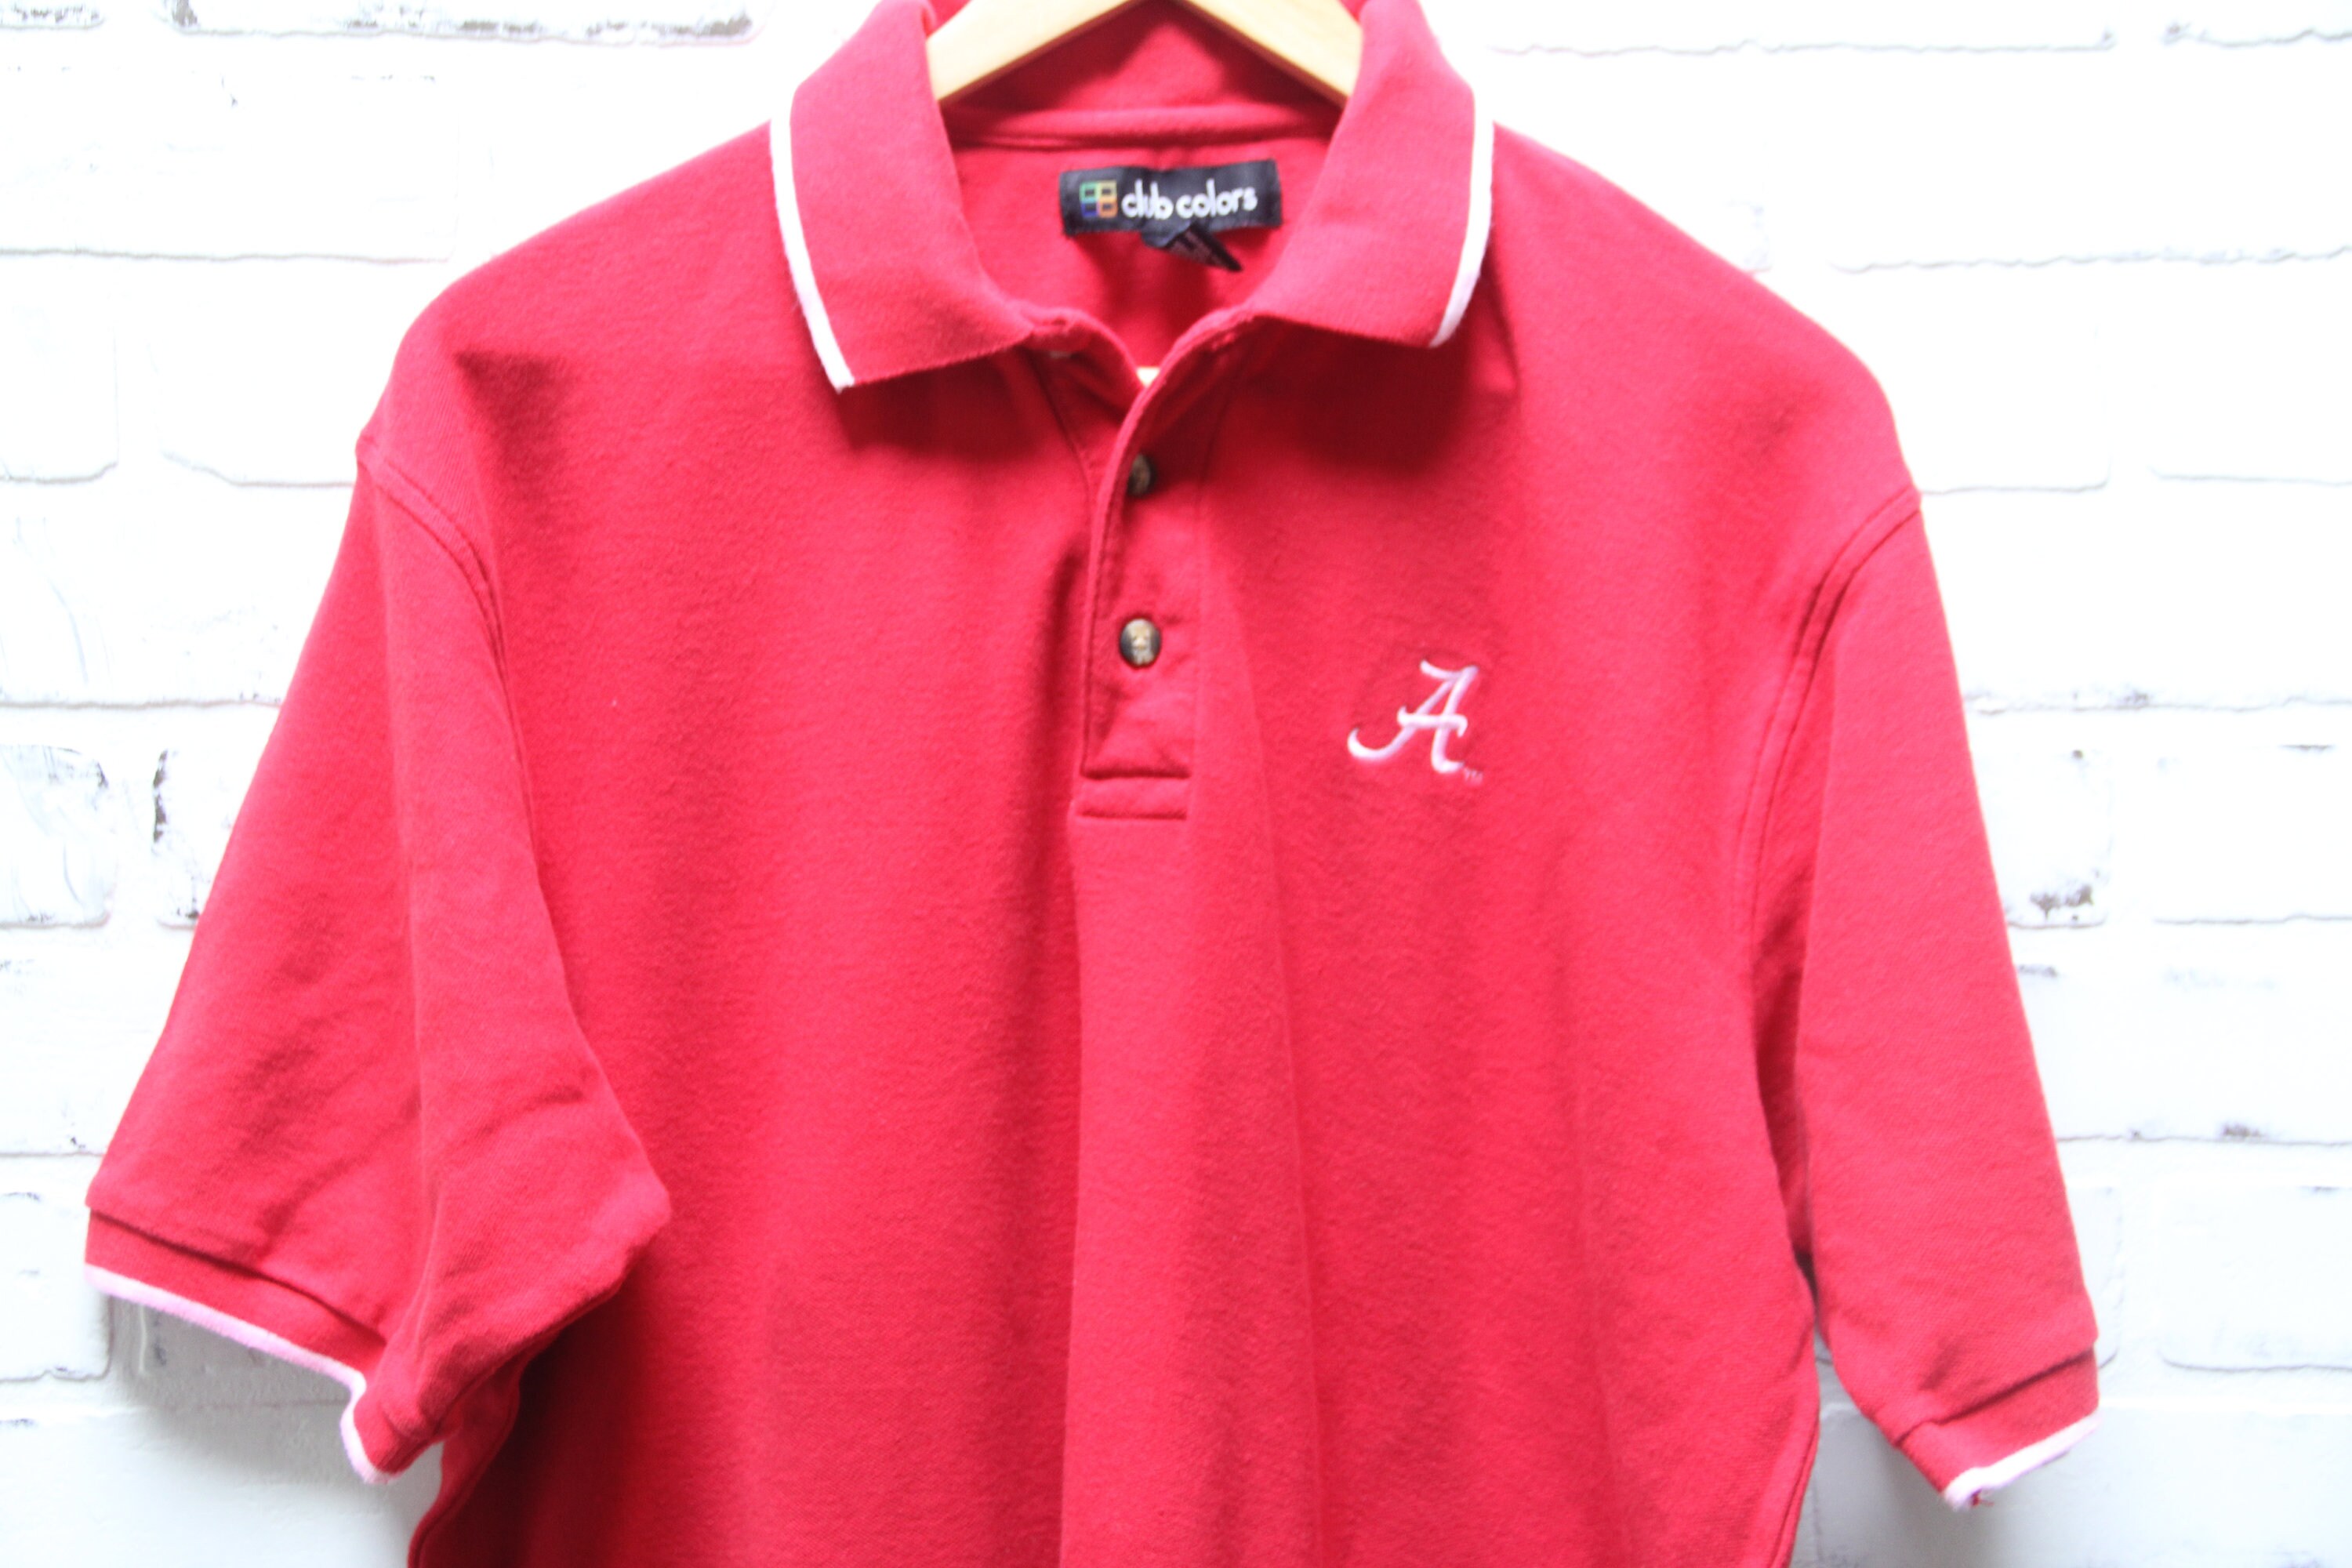 X-Large Alabama Crimson Tide Bama Mens Polo Short Sleeve Polo Shirt